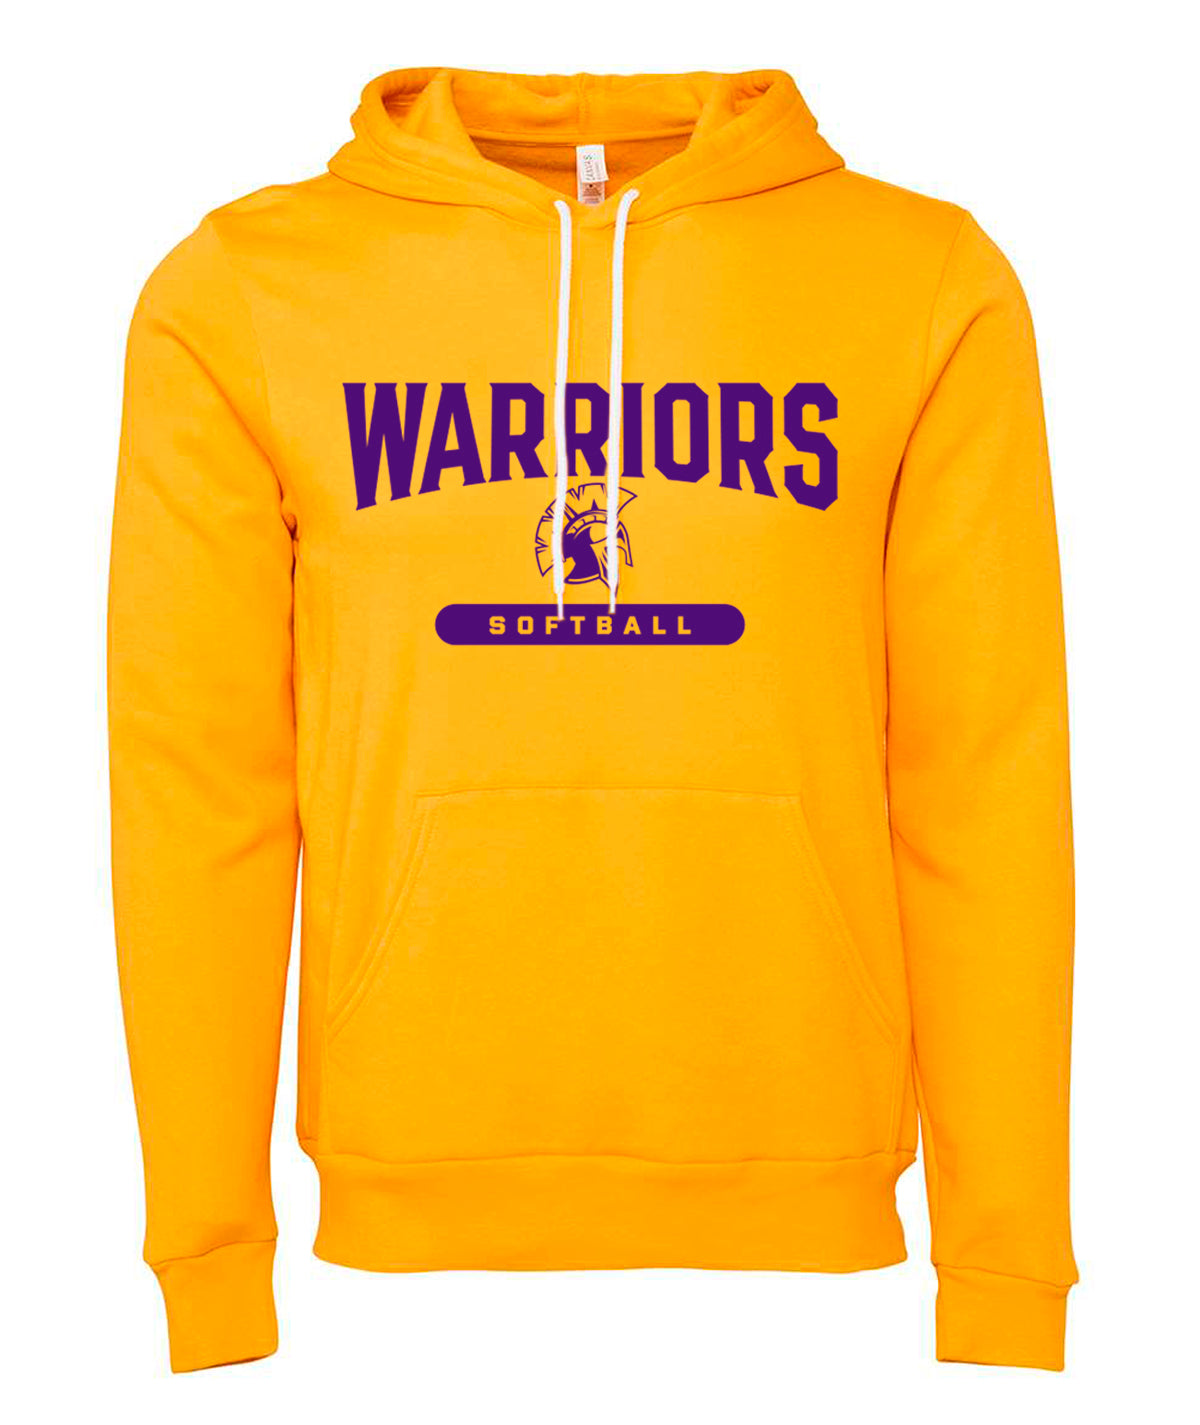 Warriors Softball Softstyle Hooded Sweatshirt